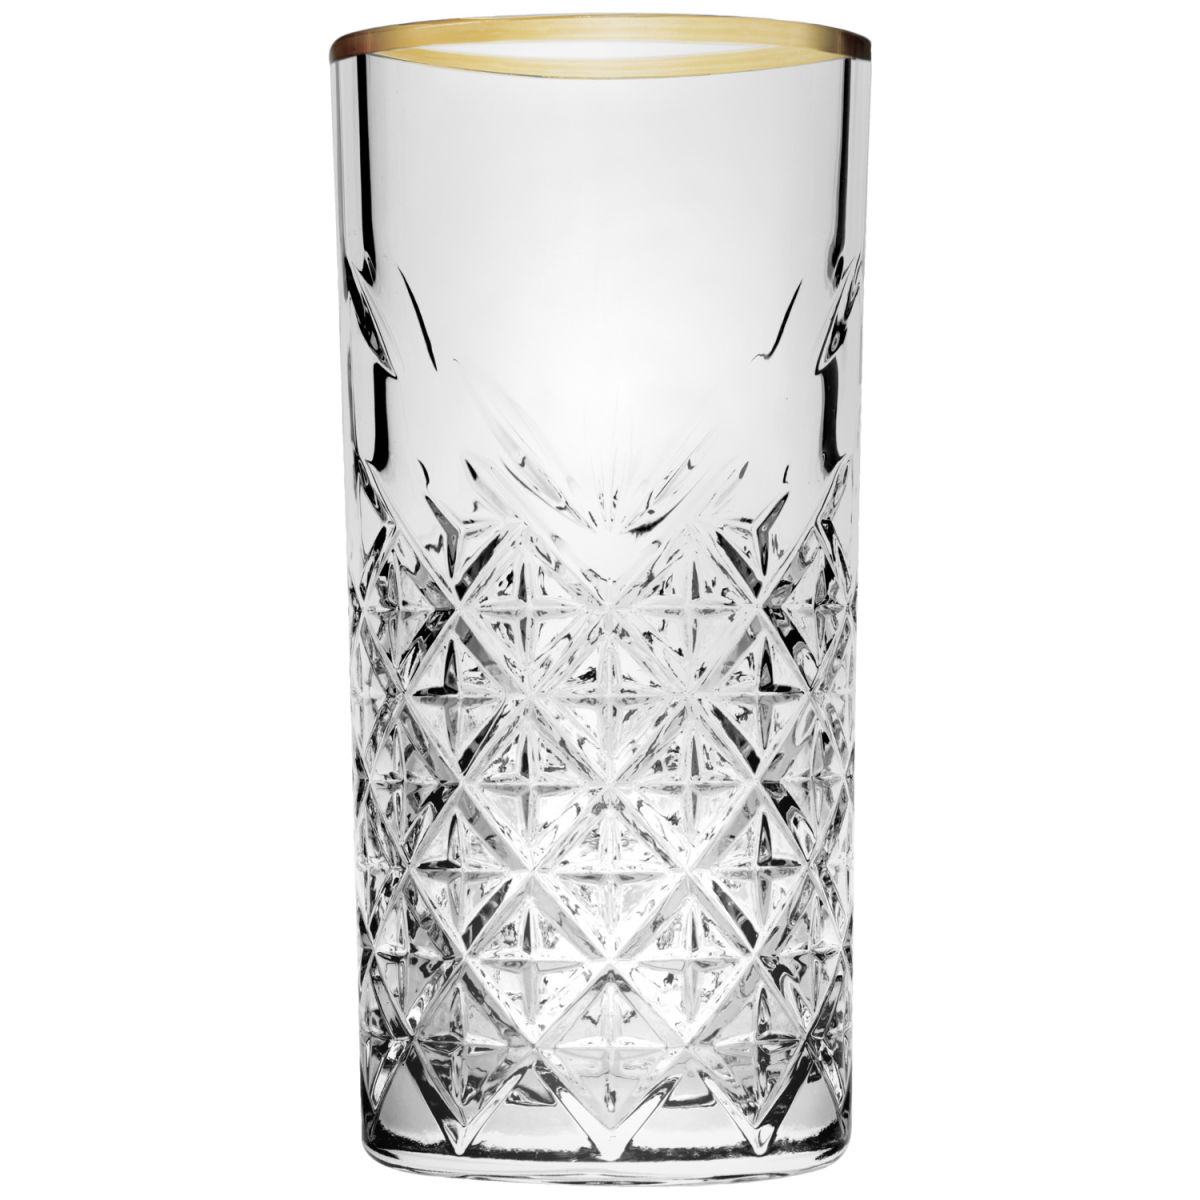 Pasabahçe Highballglas Timeless; 45cl, 7.8x16.1 cm (ØxH); Transparent/Guldfärg; 4 Styck / Förpackning